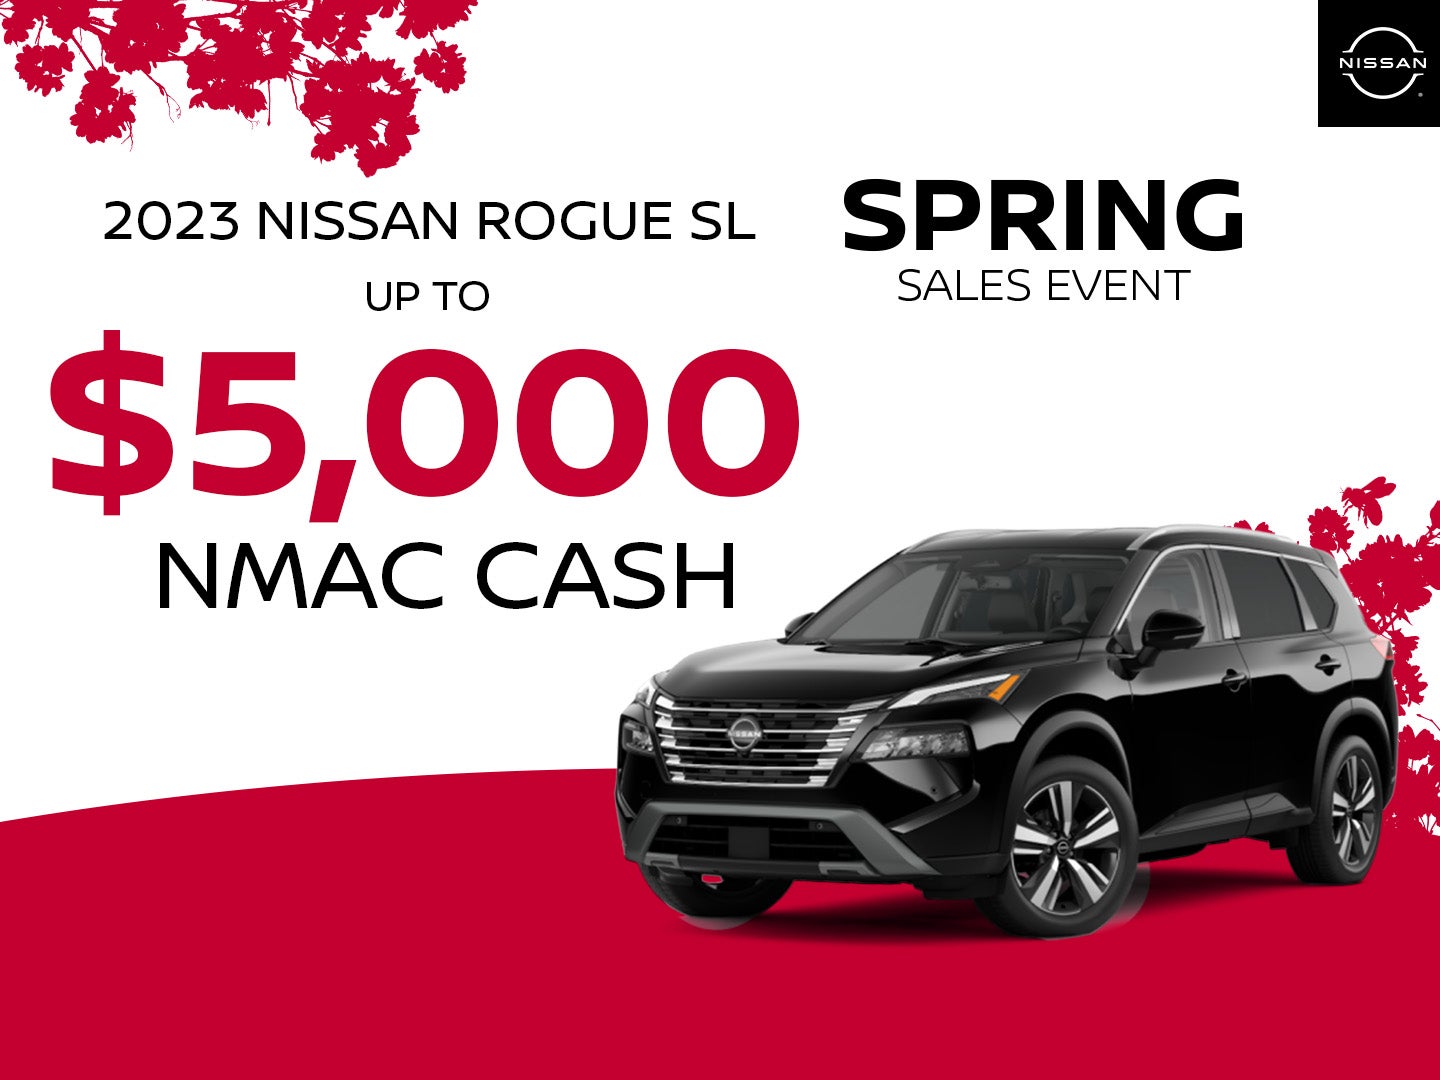 2023 Nissan Rogue SL
Up to $5,000 NMAC Cash